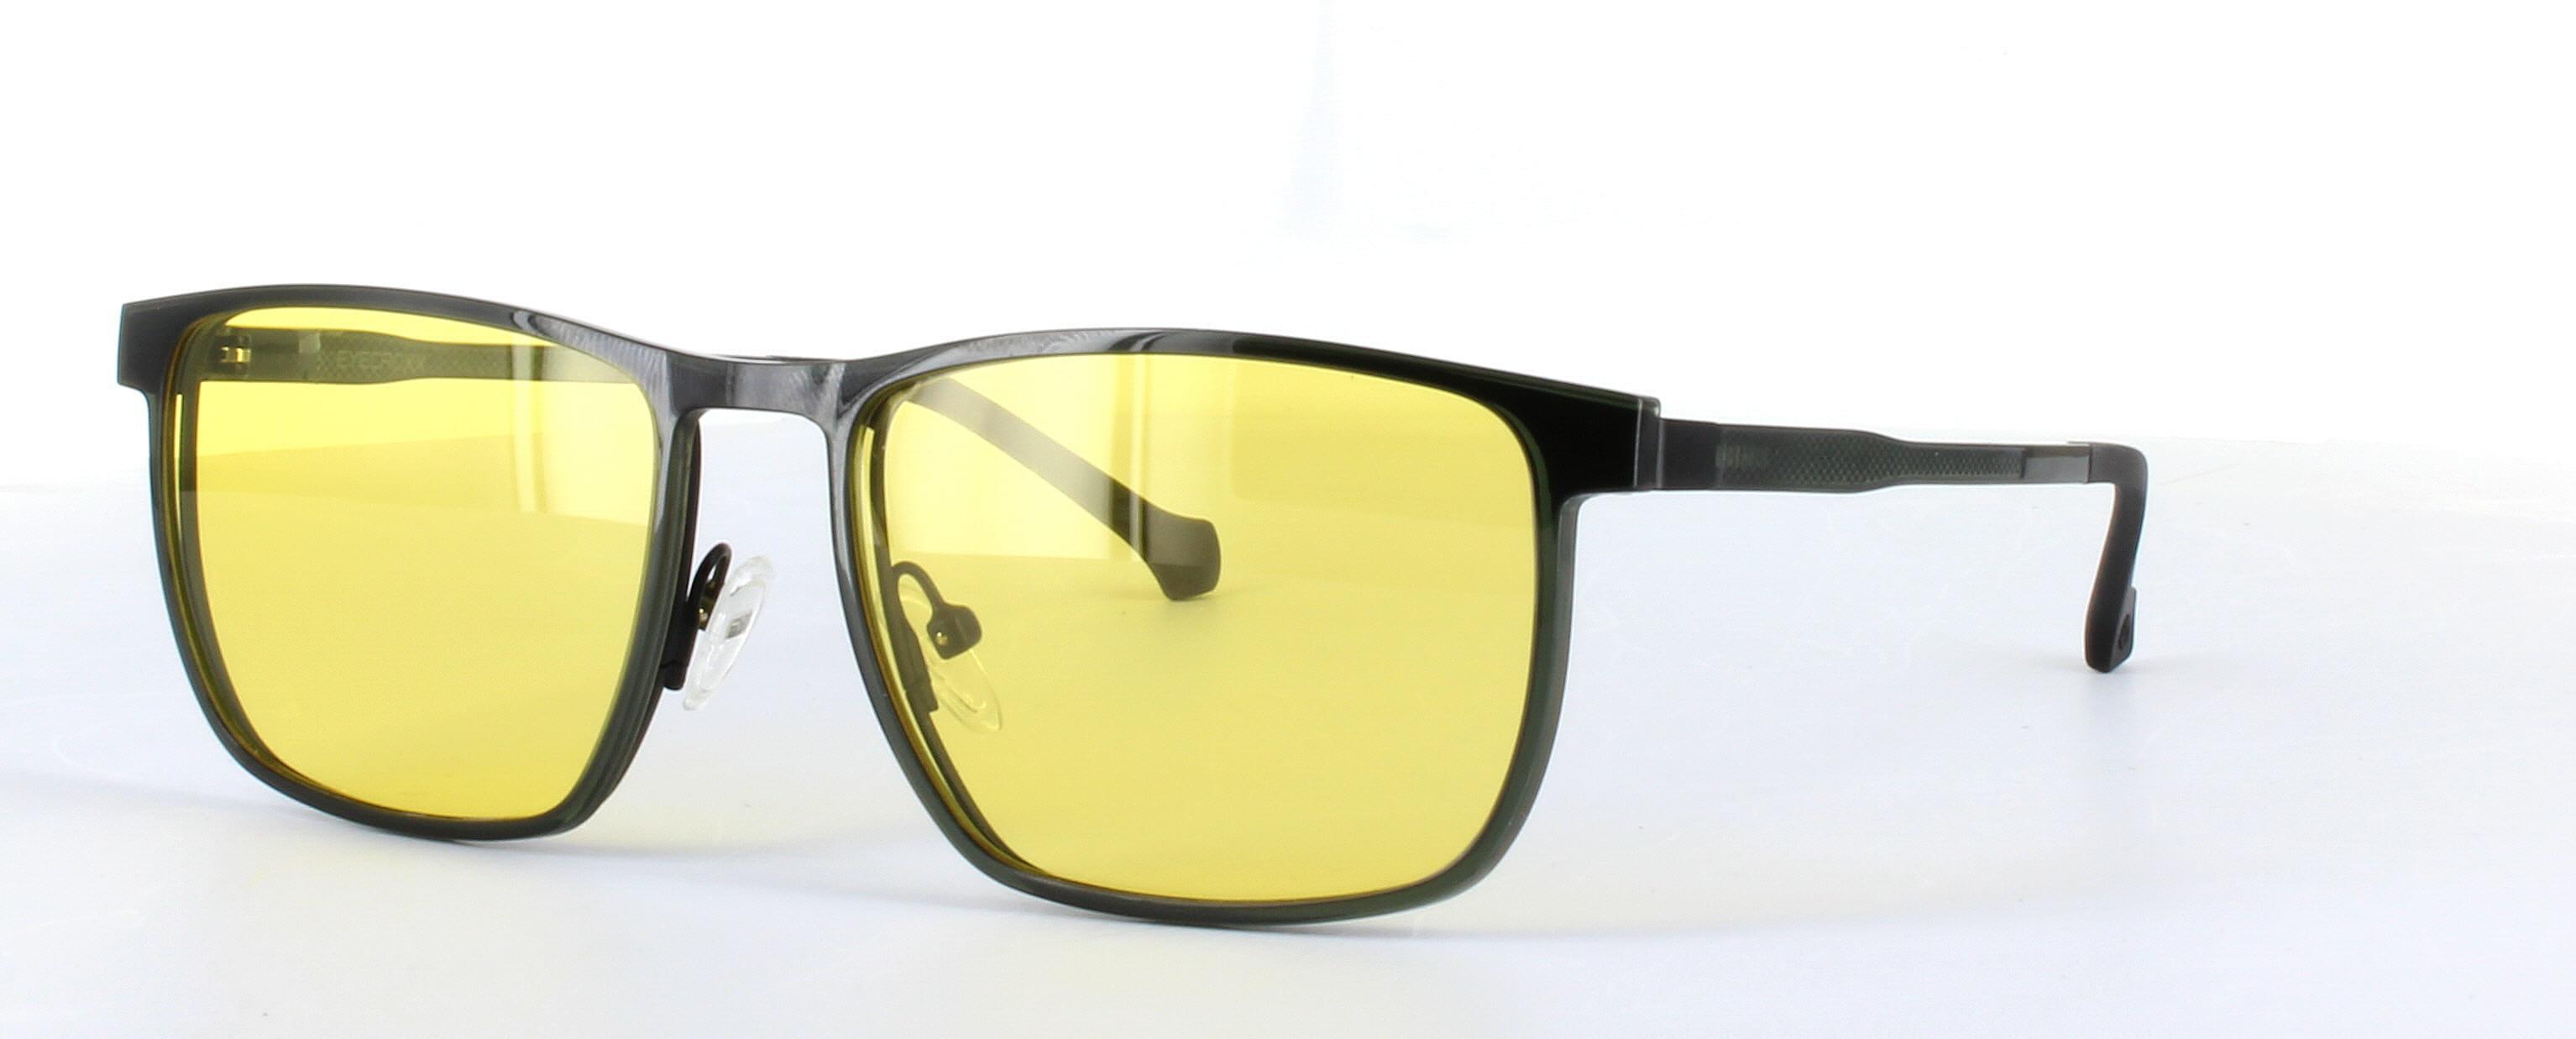 Eyecroxx 601 Grey Full Rim Metal Glasses - Image View 4